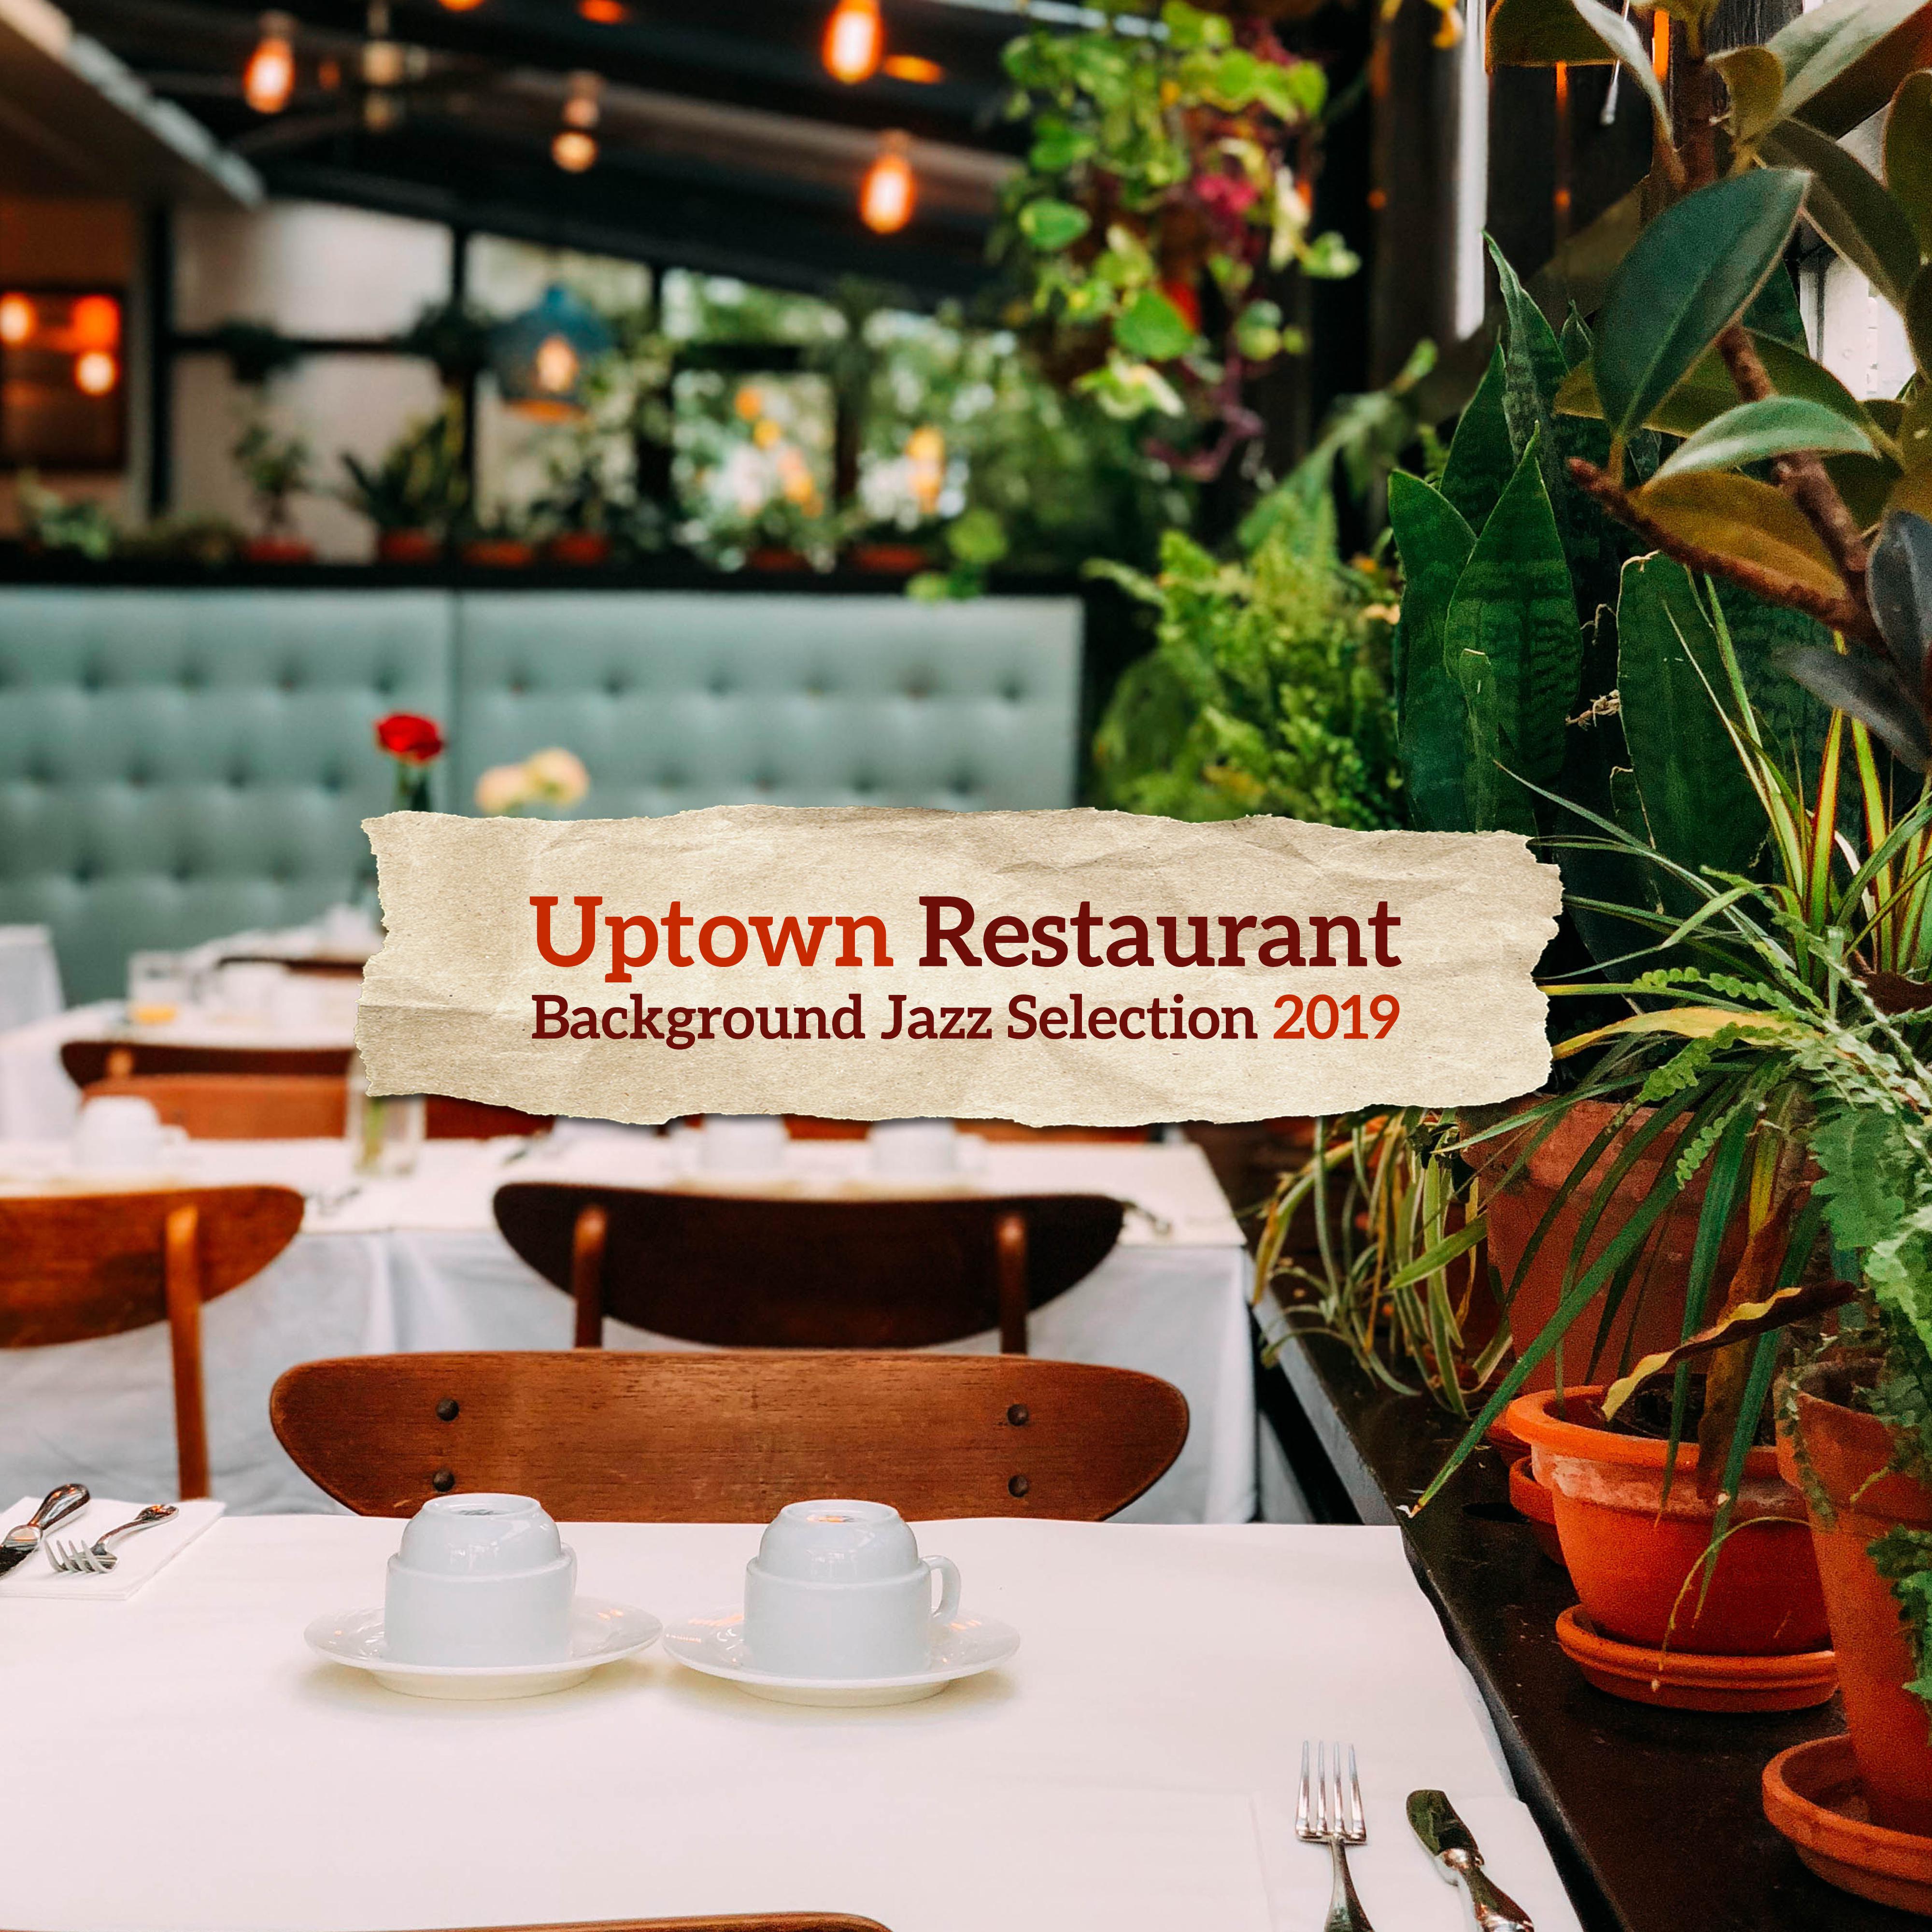 Uptown Restaurant Background Jazz Selection 2019